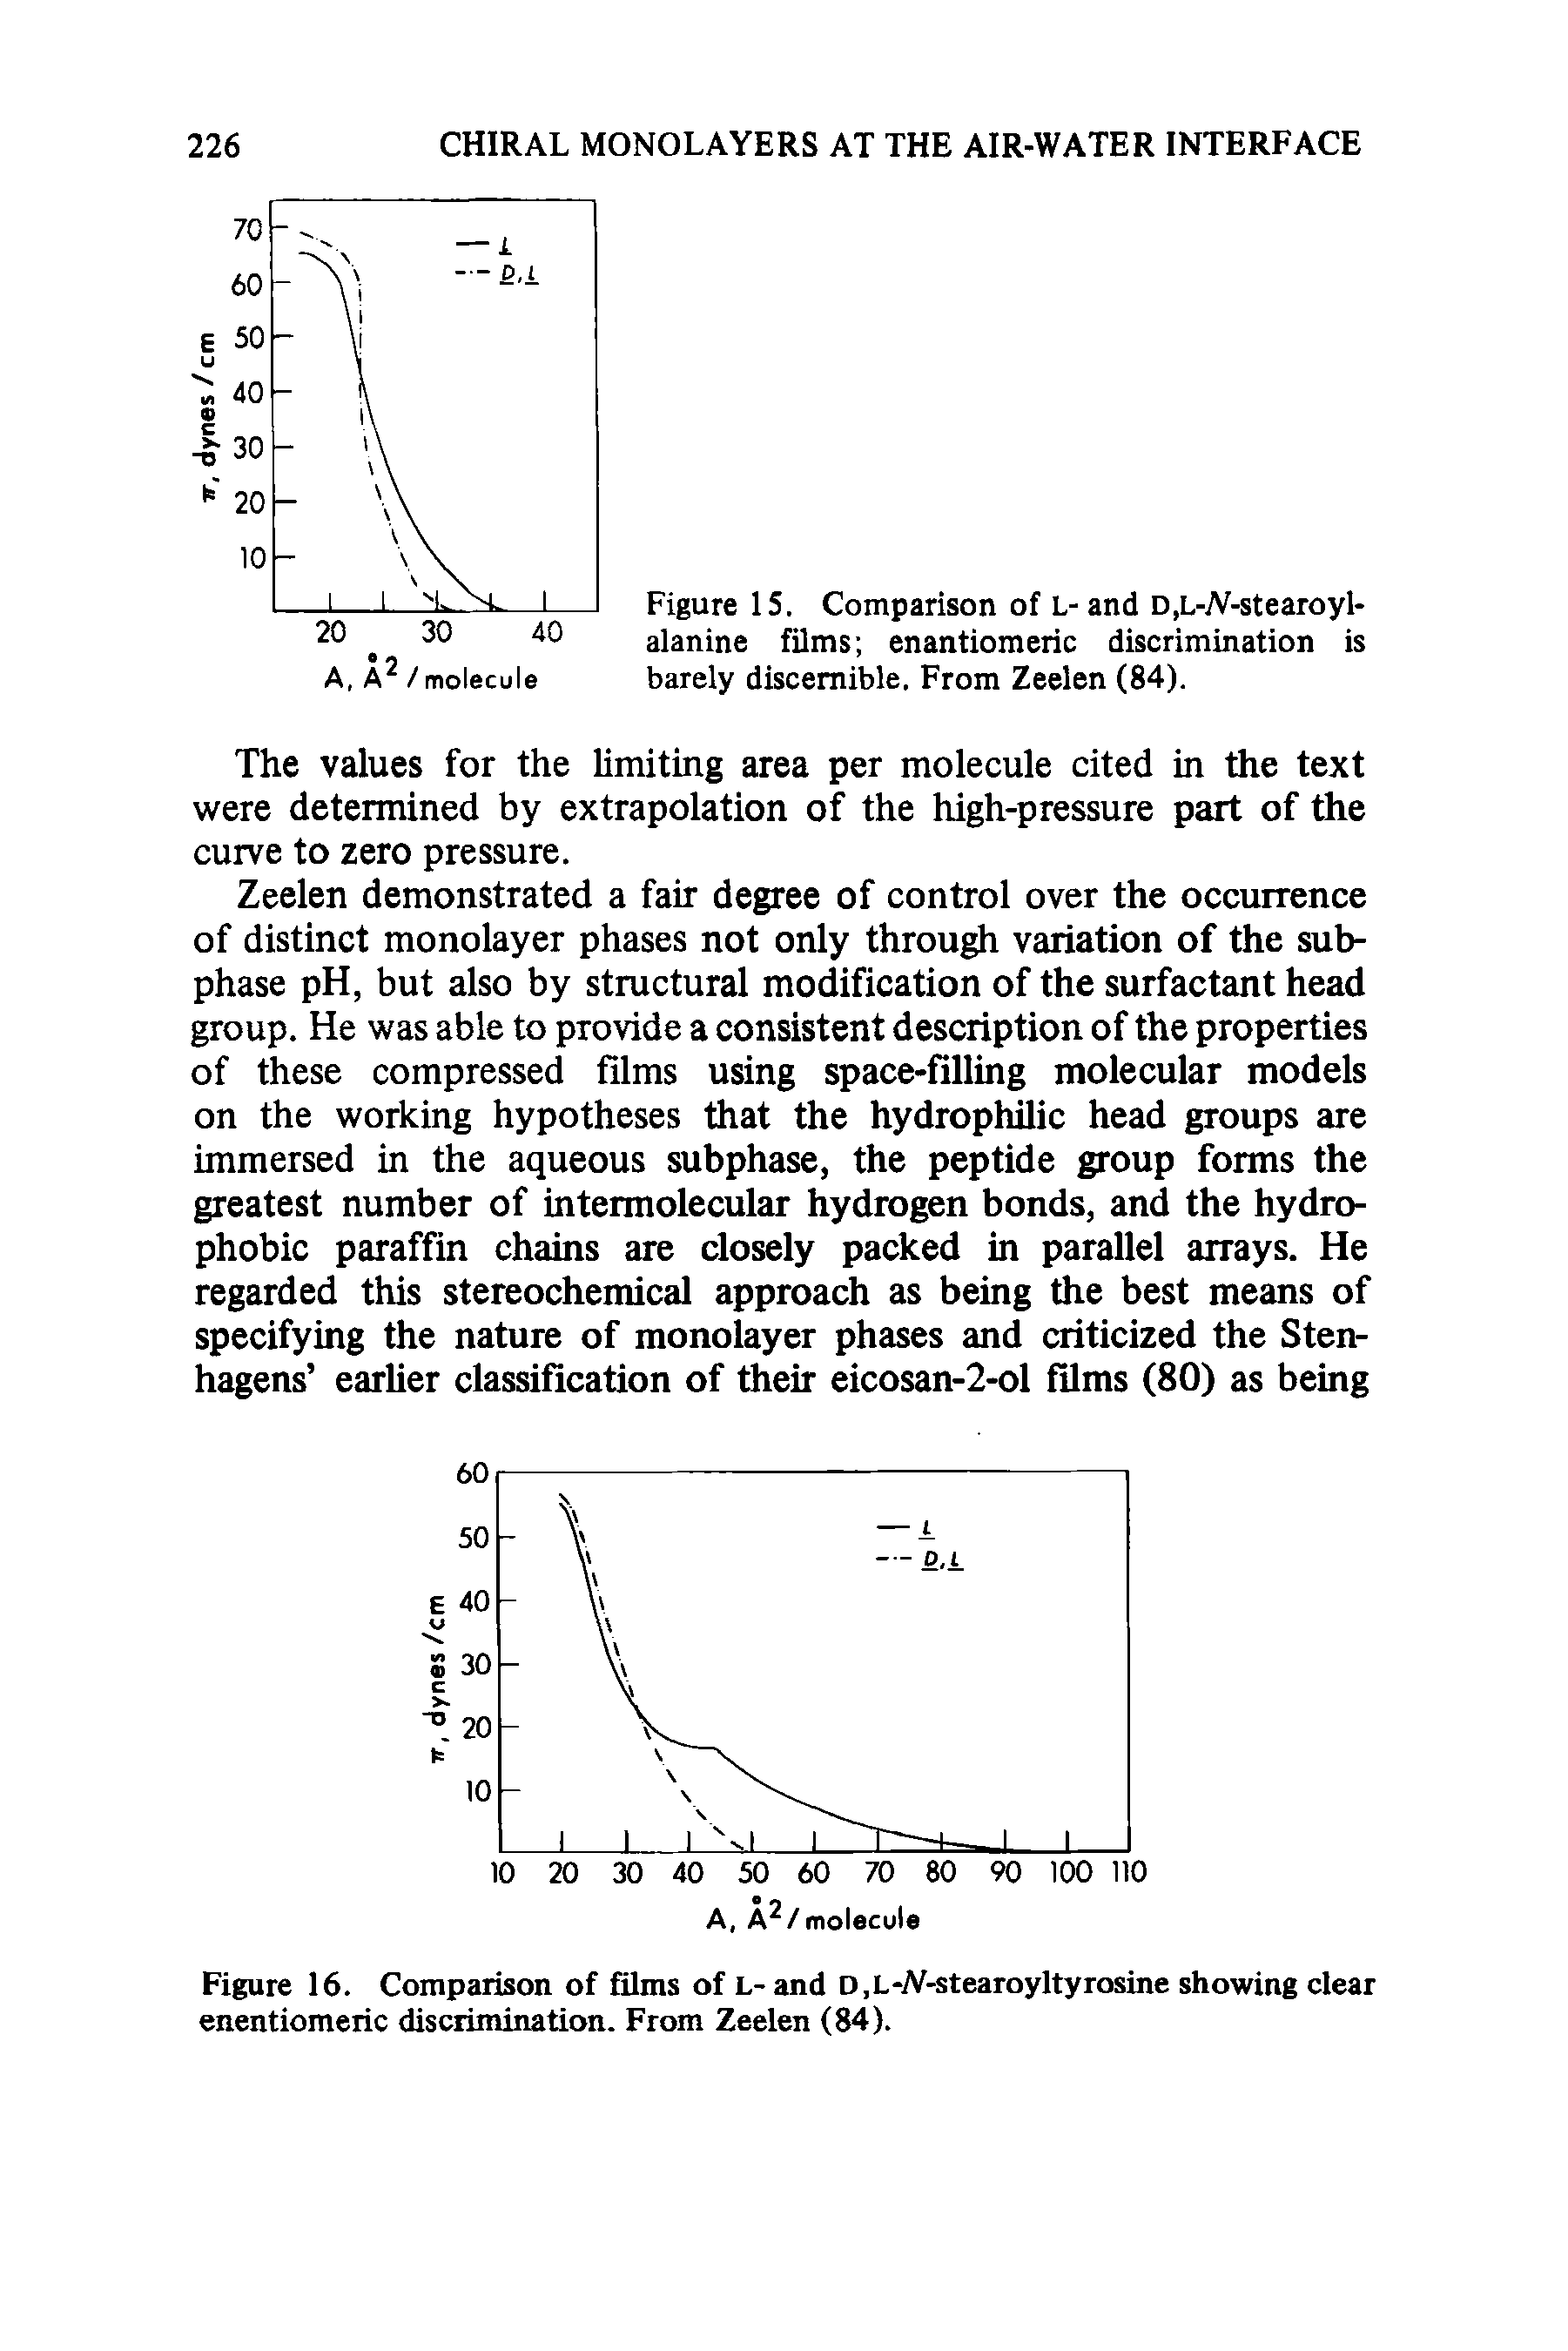 Figure 15. Comparison of L- and D,L-A-stearoyl-alanine films enantiomeric discrimination is barely discernible. From Zeelen (84).